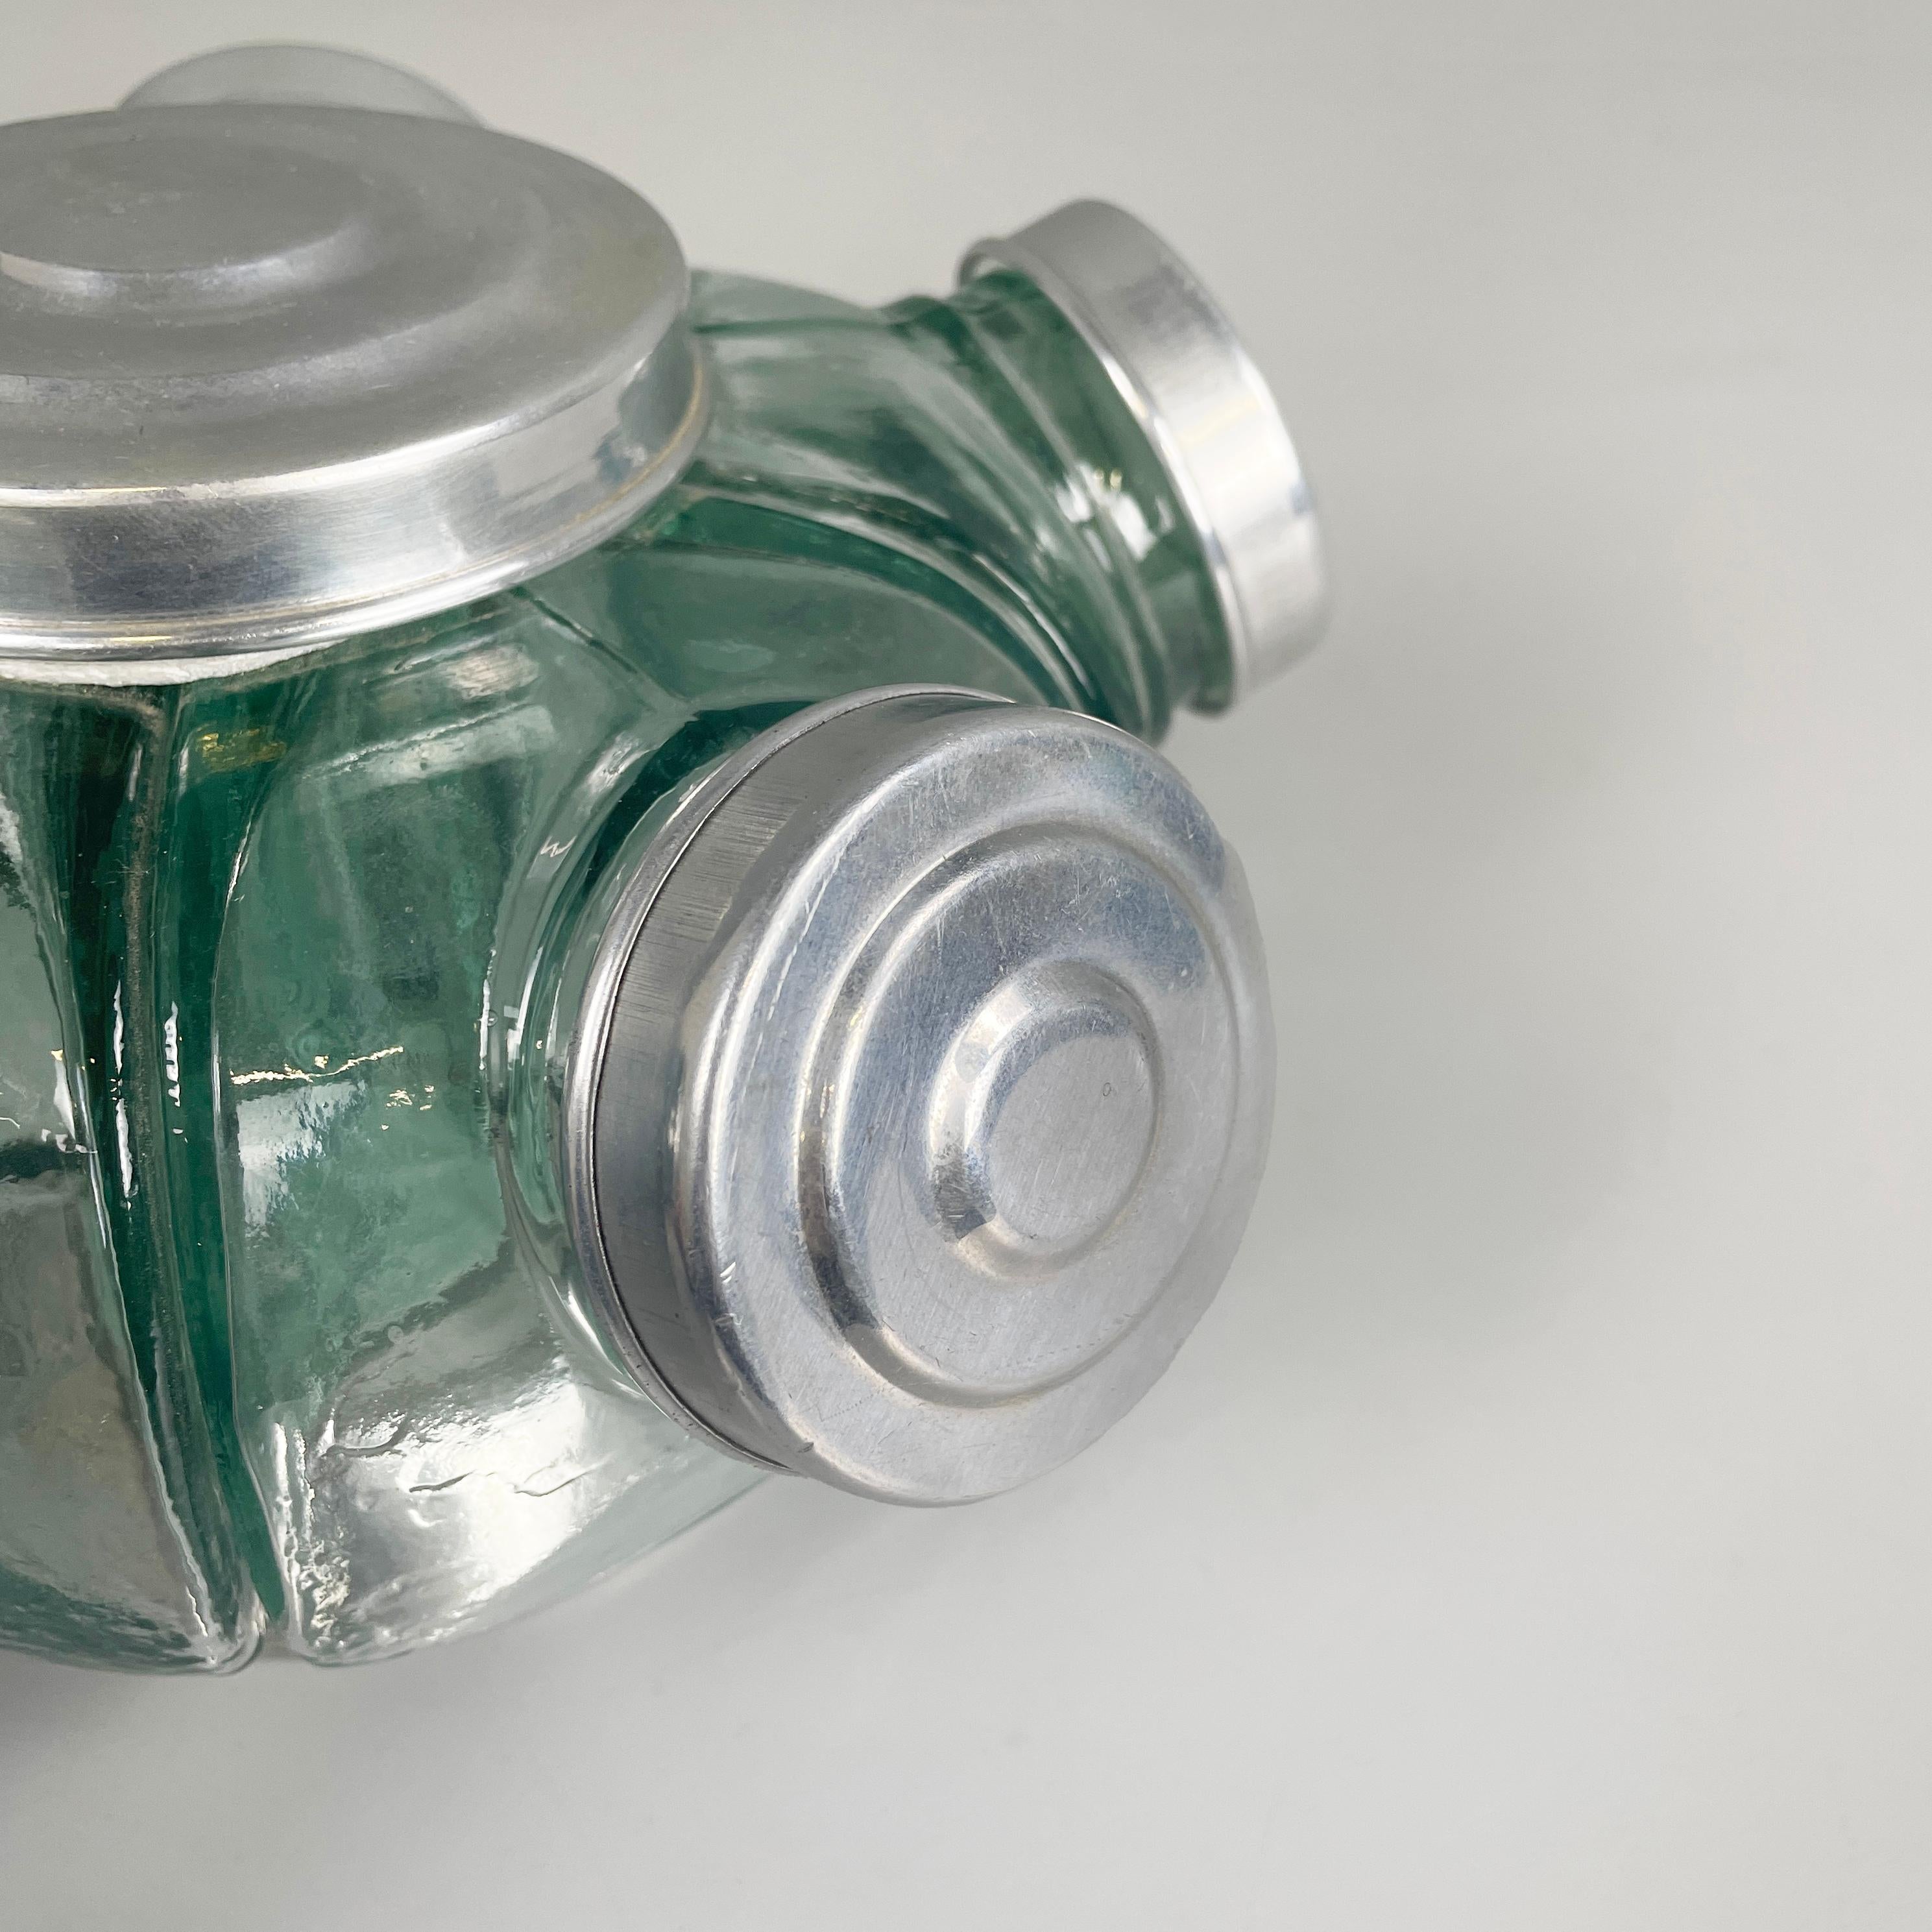 Metal Italian mid-century modern Candy holder in aqua green glass and metal, 1950s